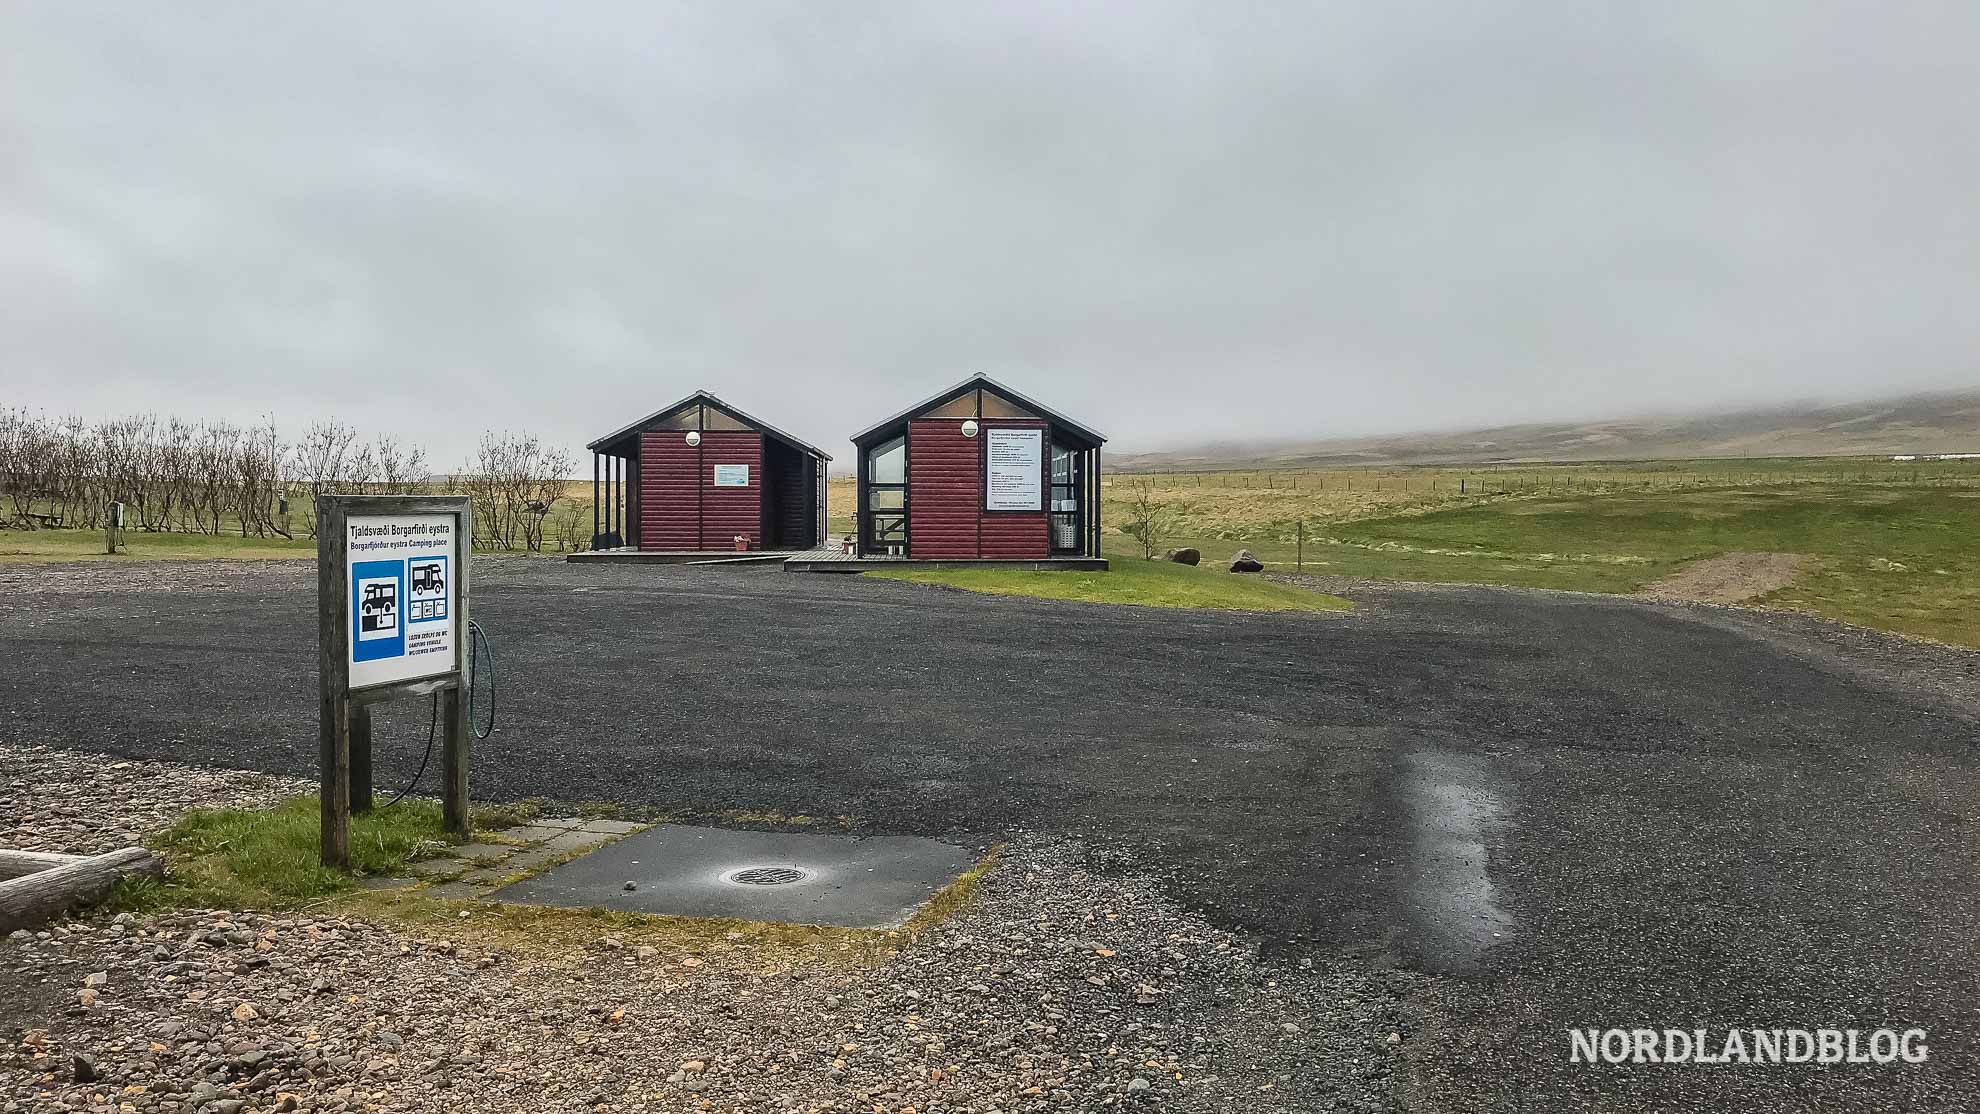 Campingplatz Stellplatz für Wohnmobil in Borgarfjörður in Island (Nordlandblog)